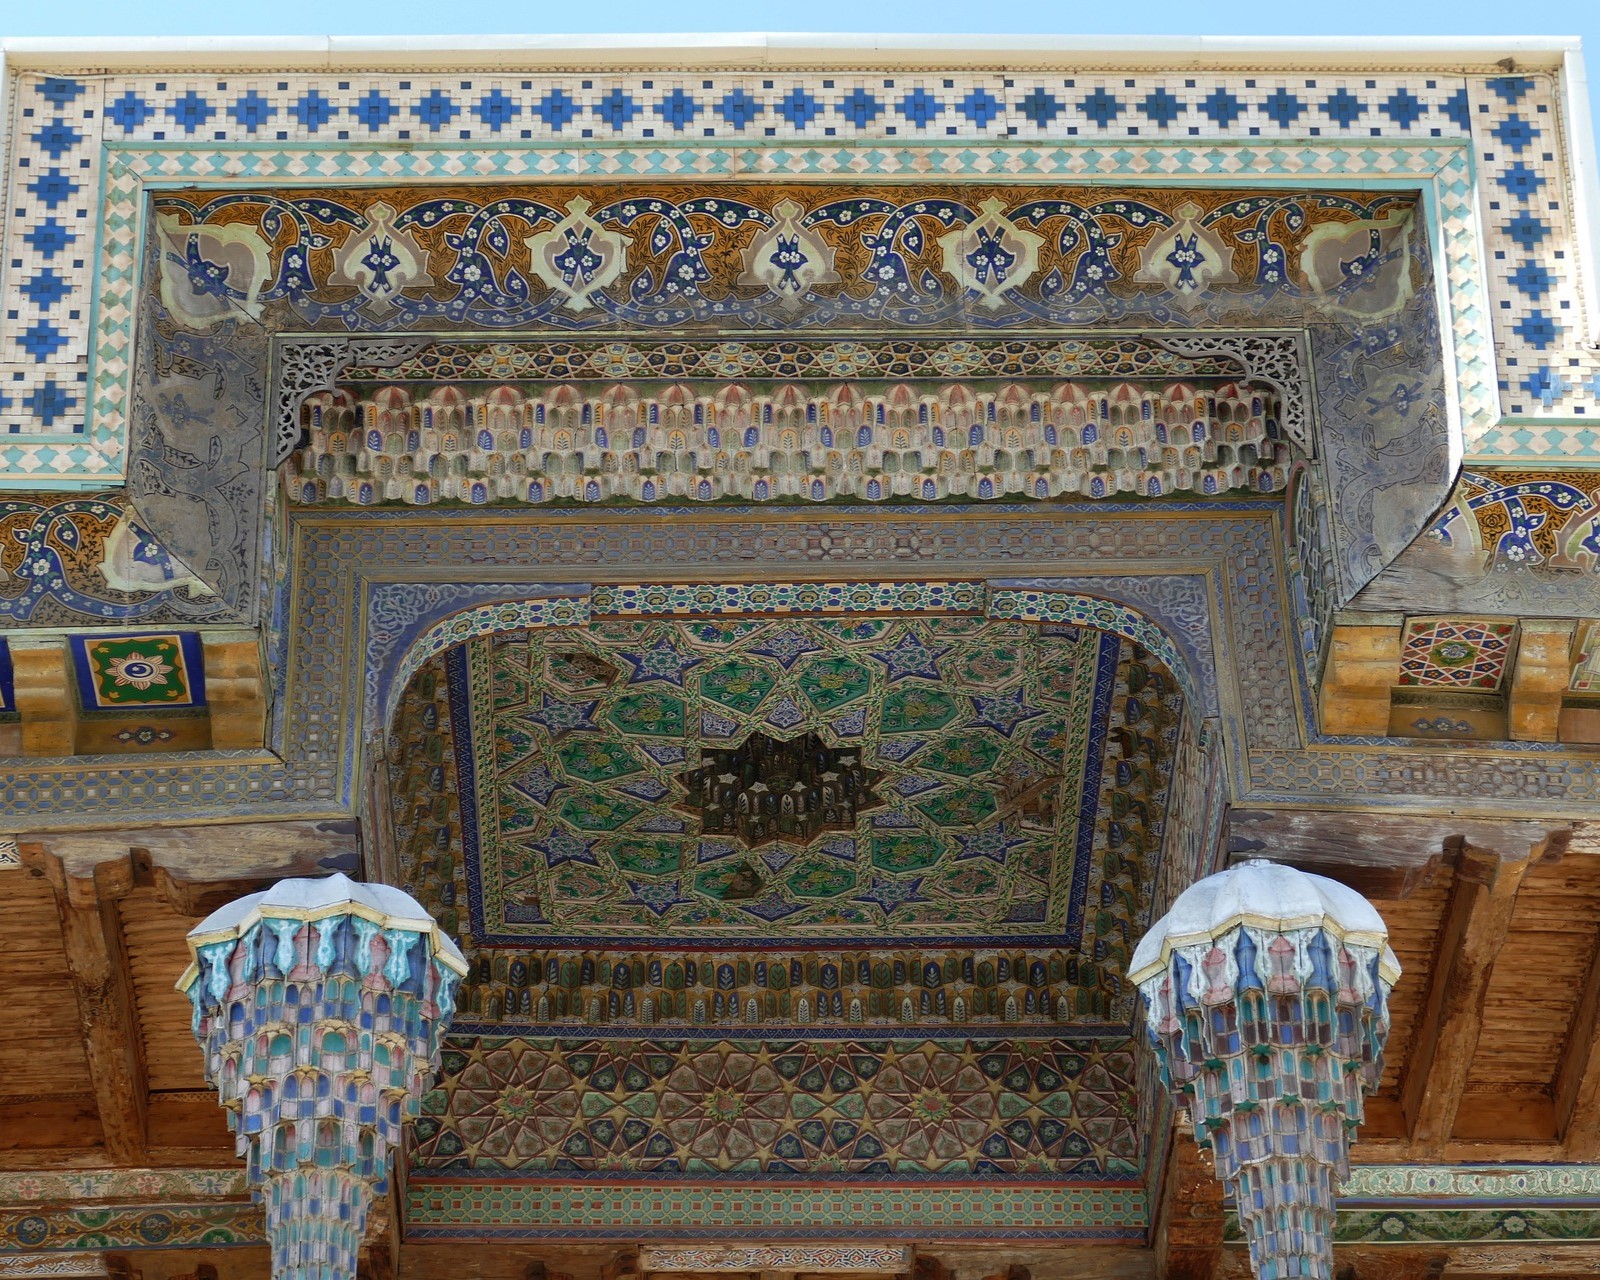 Wood carving on ceiling in Bukhara, Uzbekistan